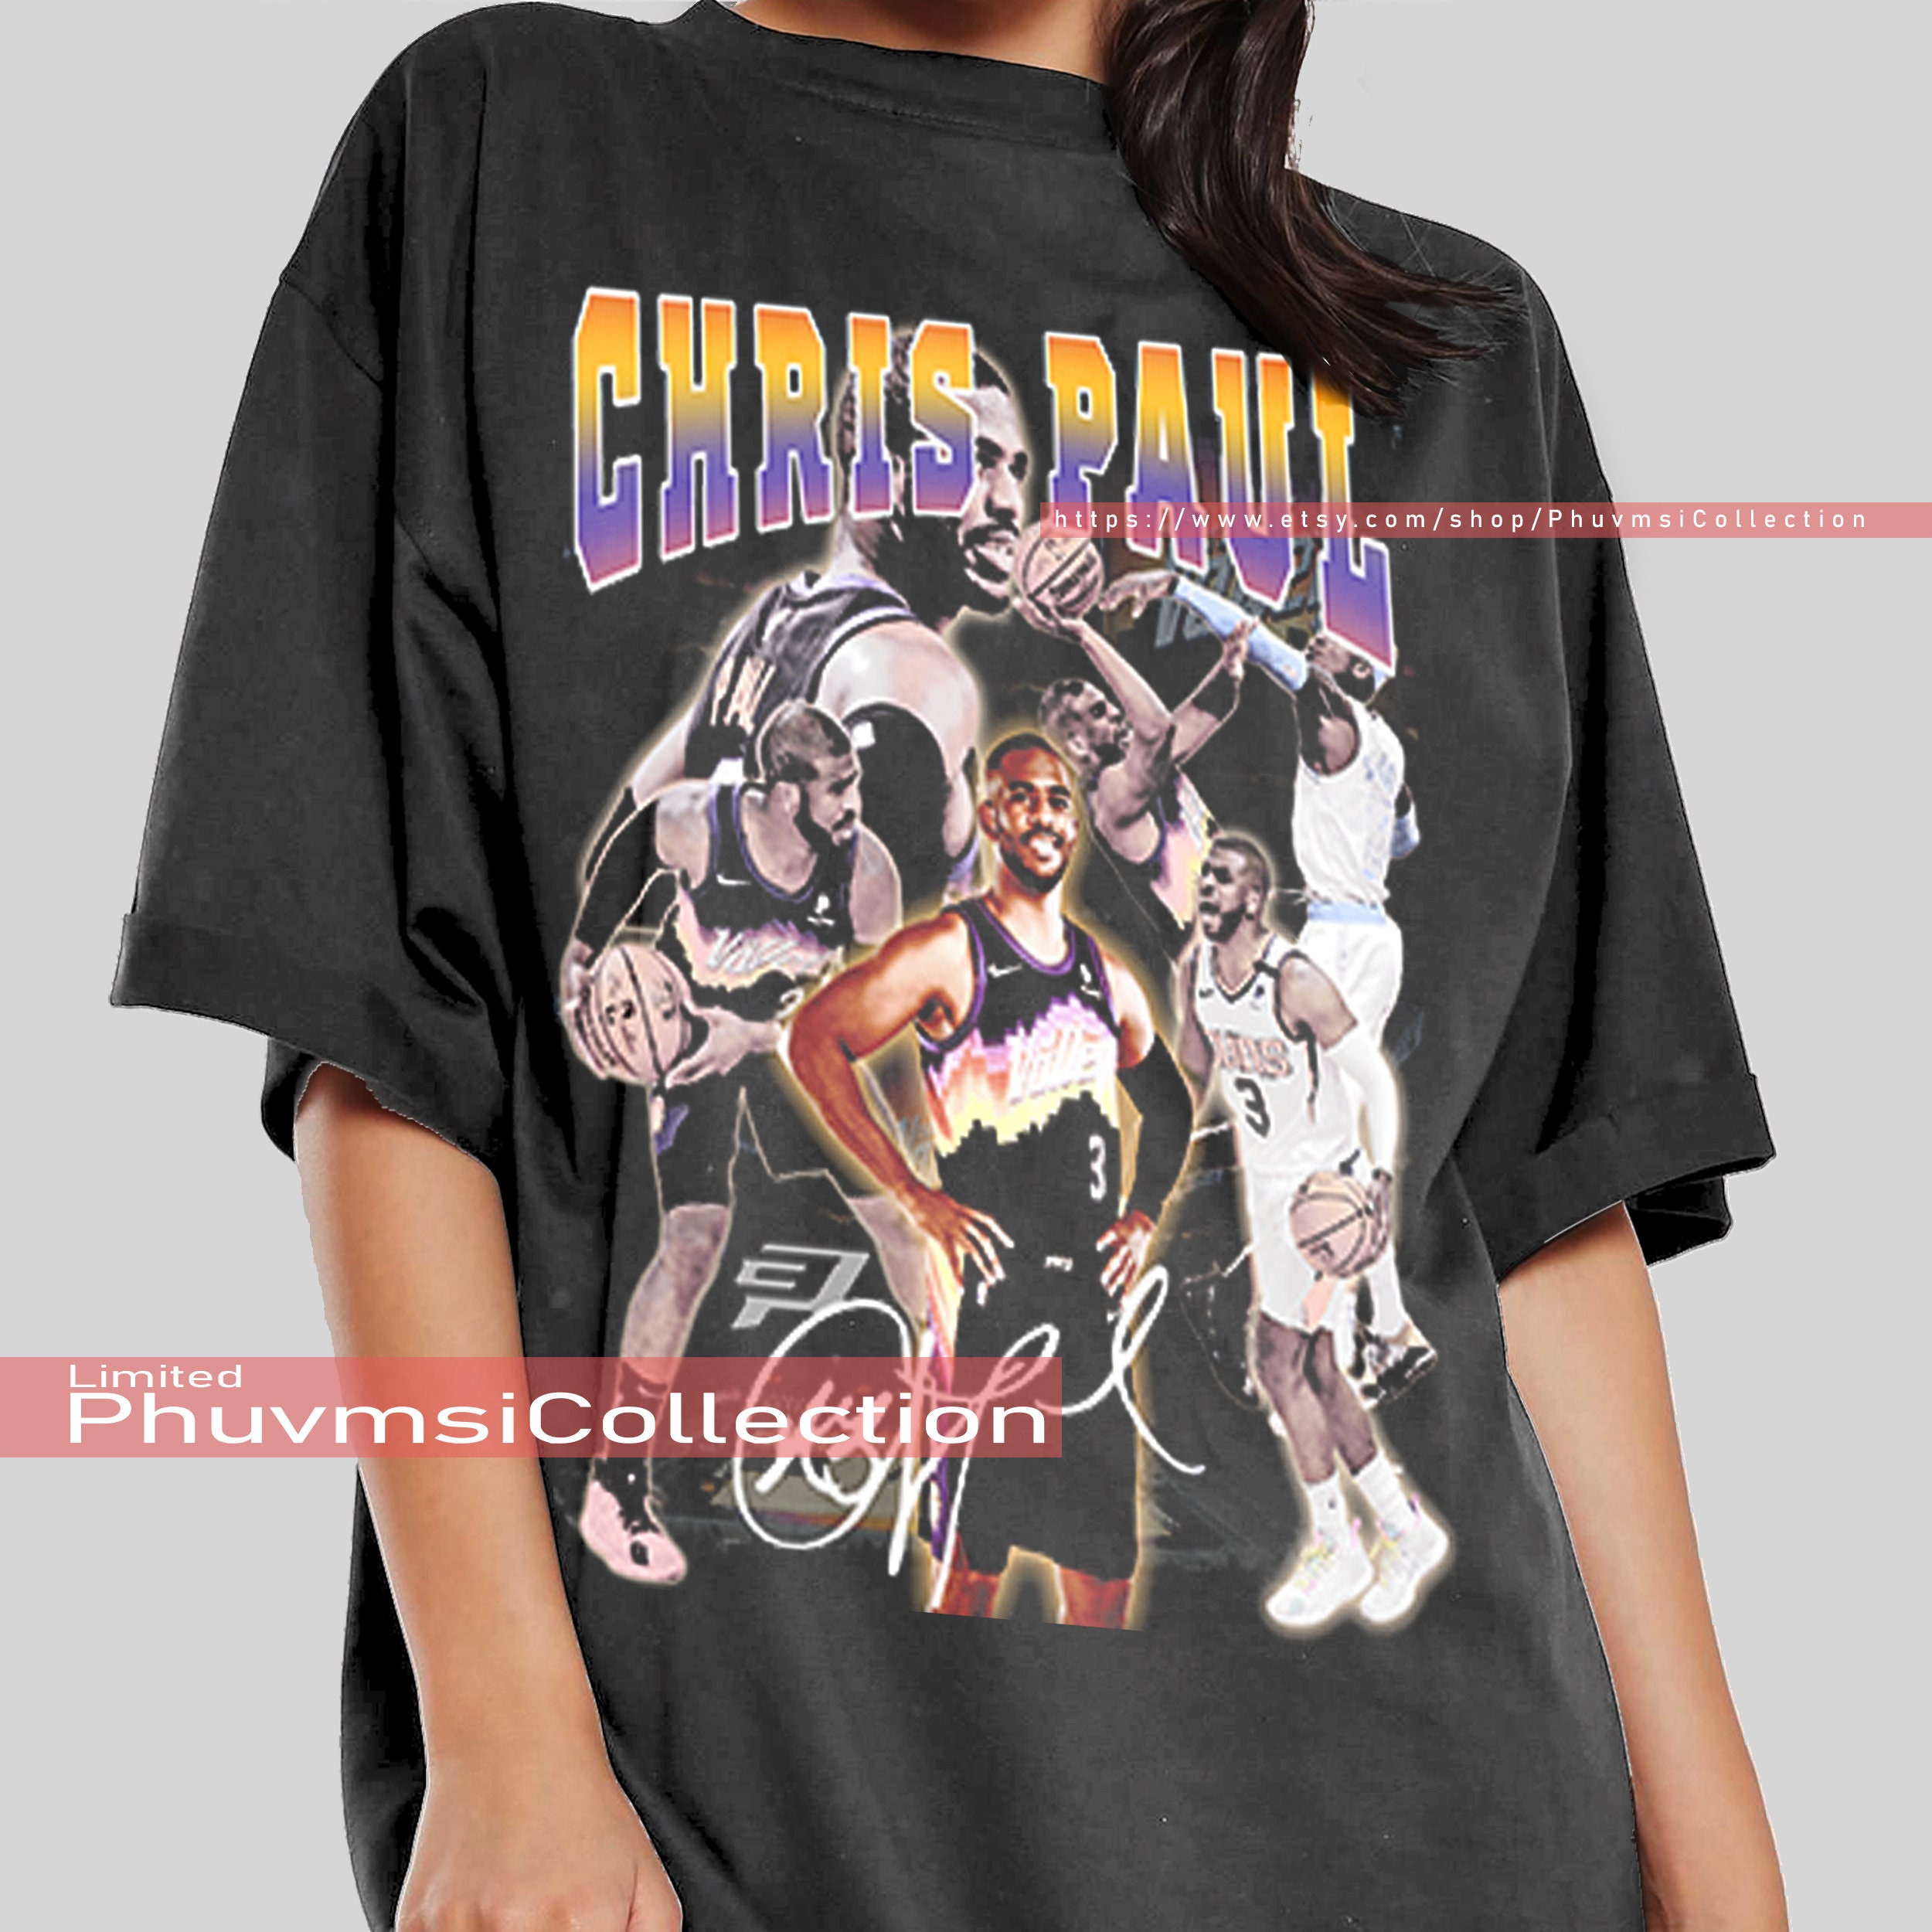 Chris Paul Unisex Adult NBA Jerseys for sale